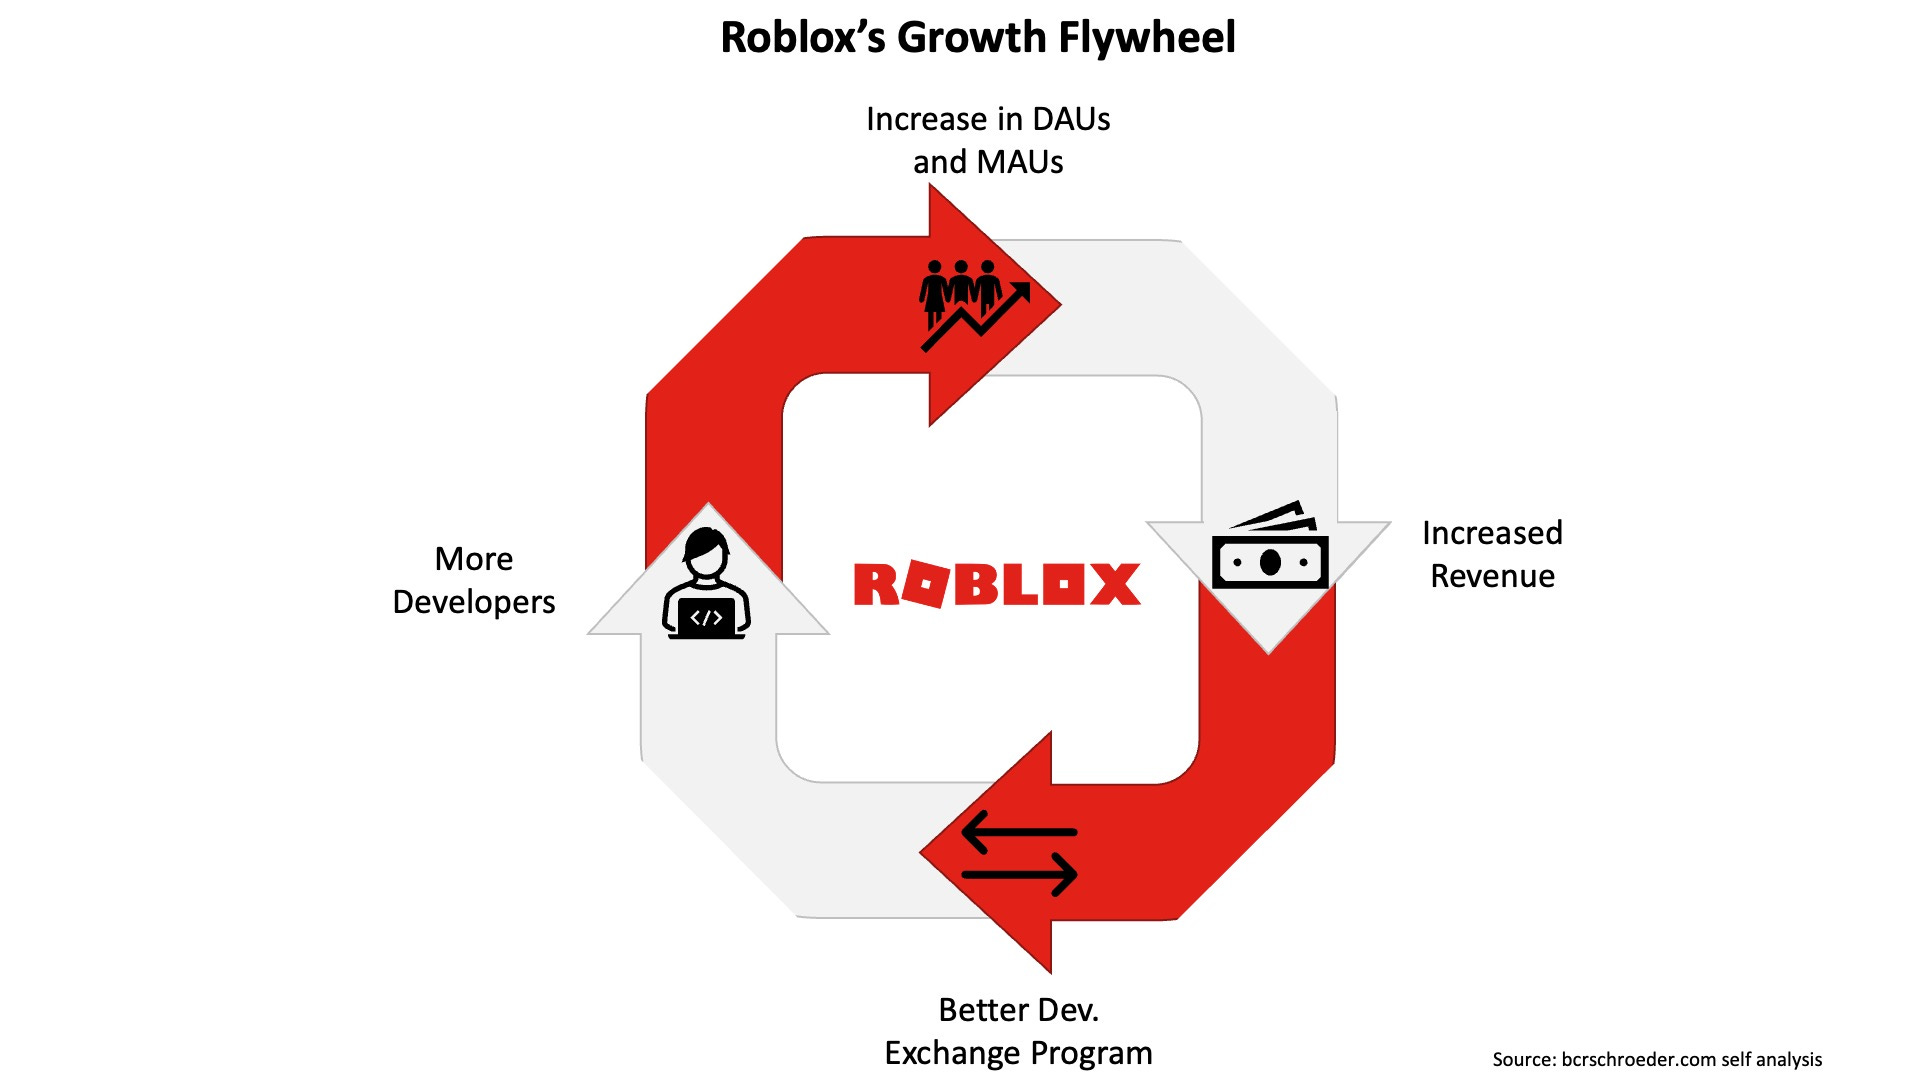 David Baszucki, CEO Who Took Roblox (RBLX) Public: Bloomberg 50